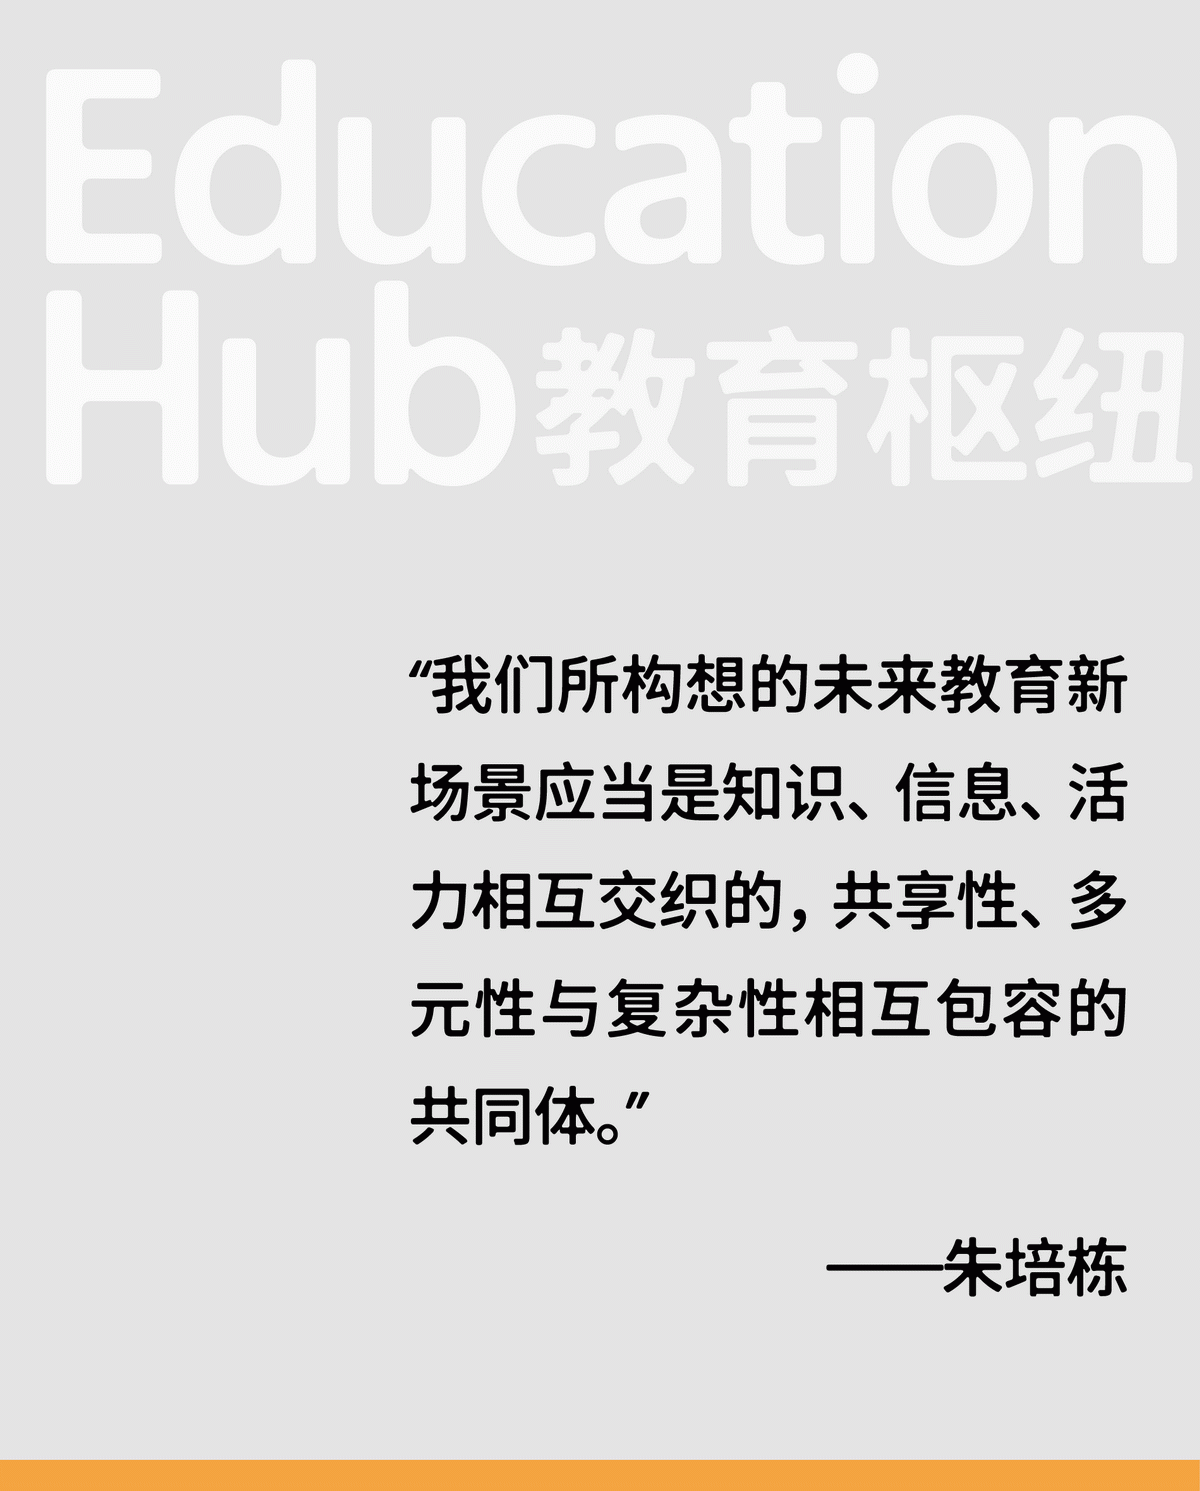 HIS杭州国际学校  建筑设计 / line+